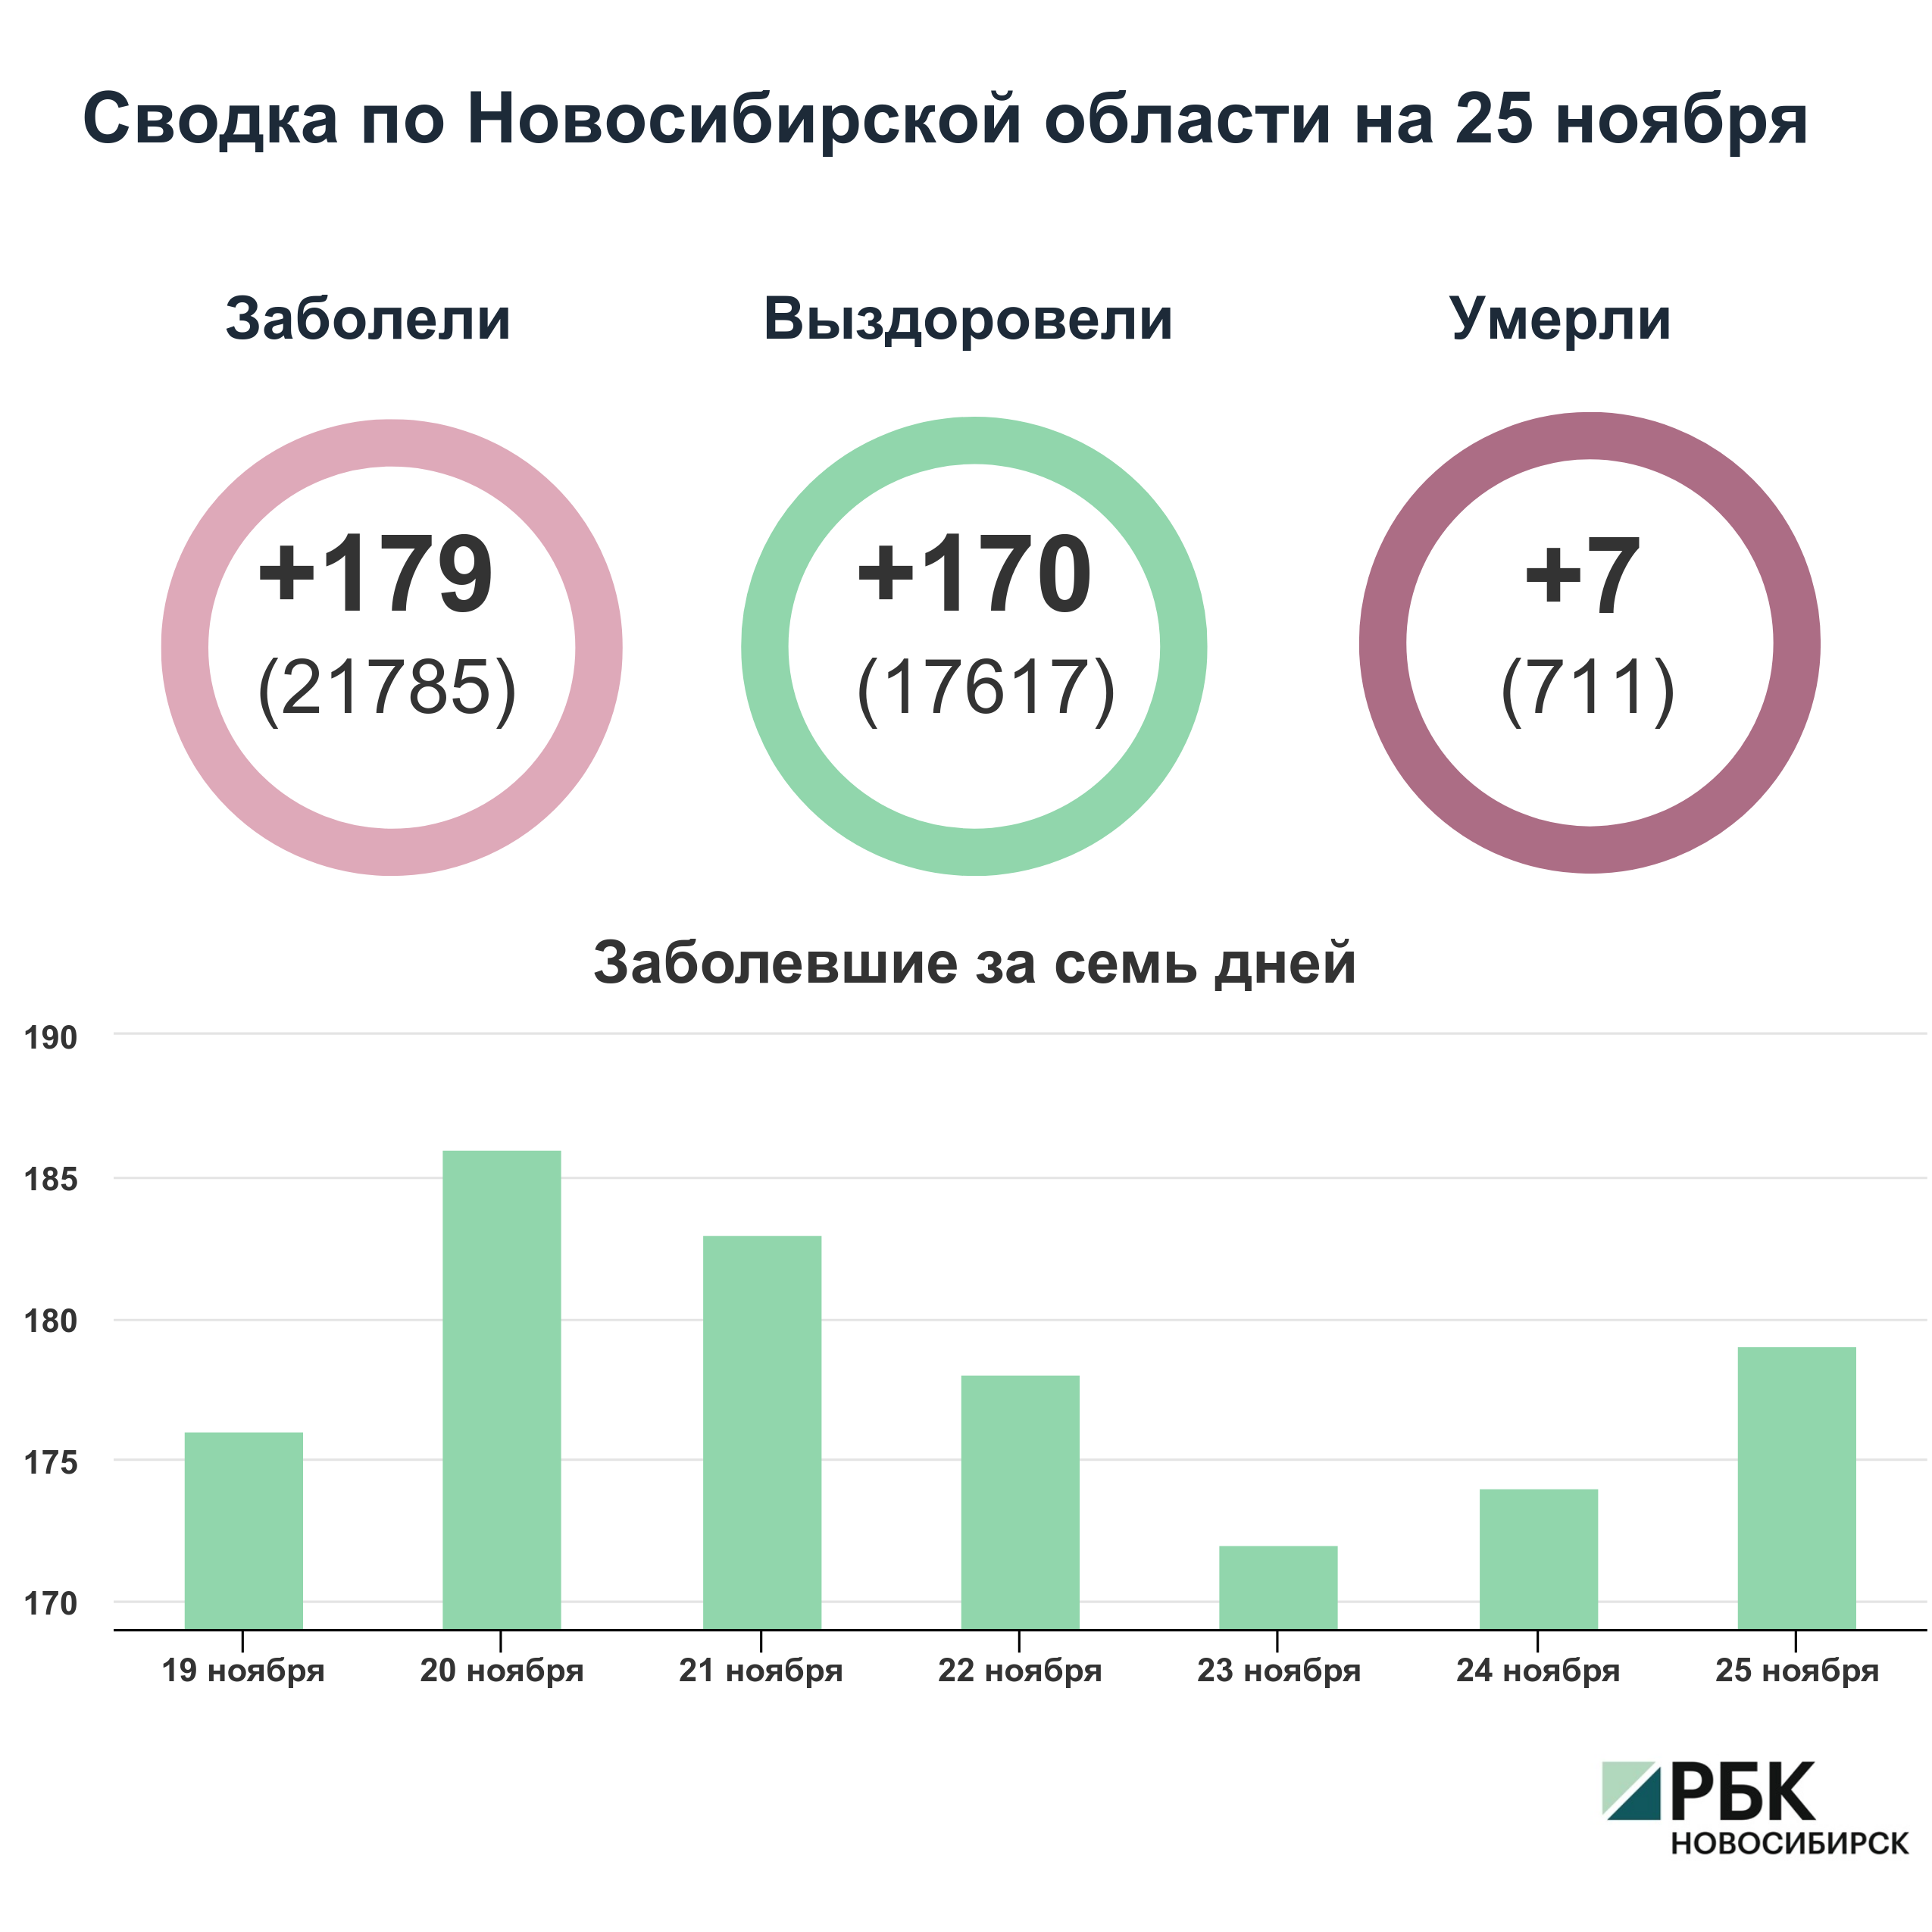 Коронавирус в Новосибирске: сводка на 25 ноября